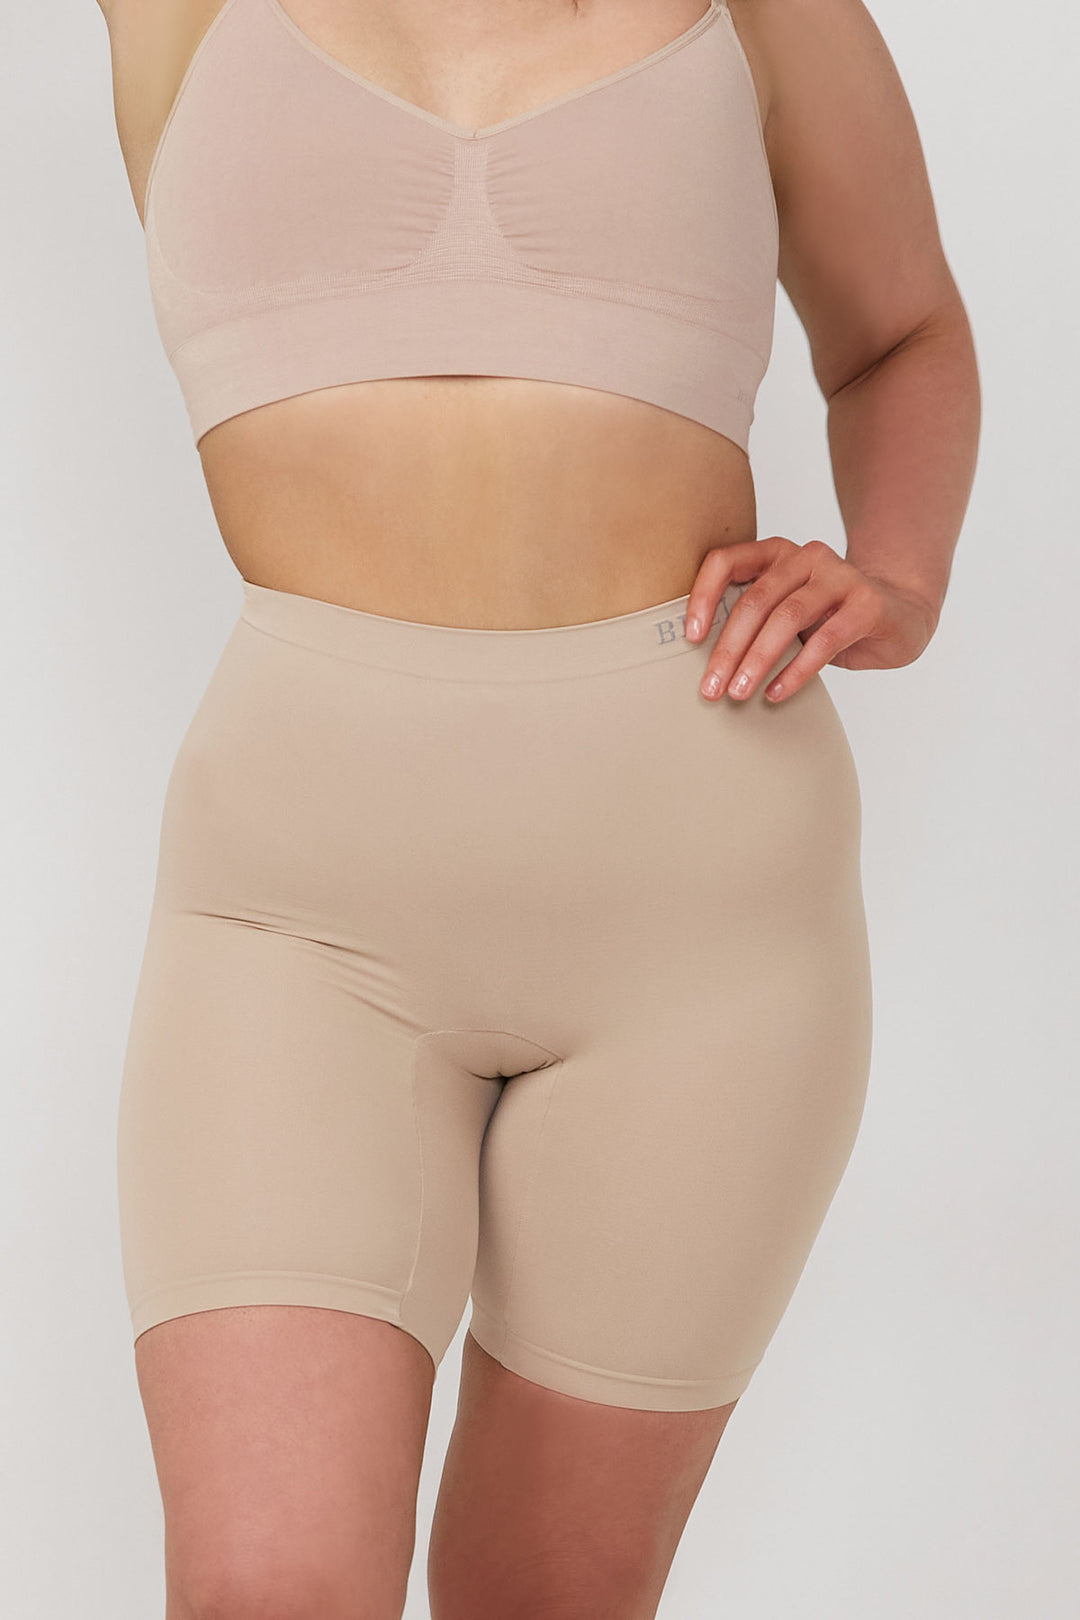 Women's anti-chafing underwear shorts Australia | Bella Bodies Australia | Coolfit Everday Anti Chafing Shorts | 2pk | Sand | Front